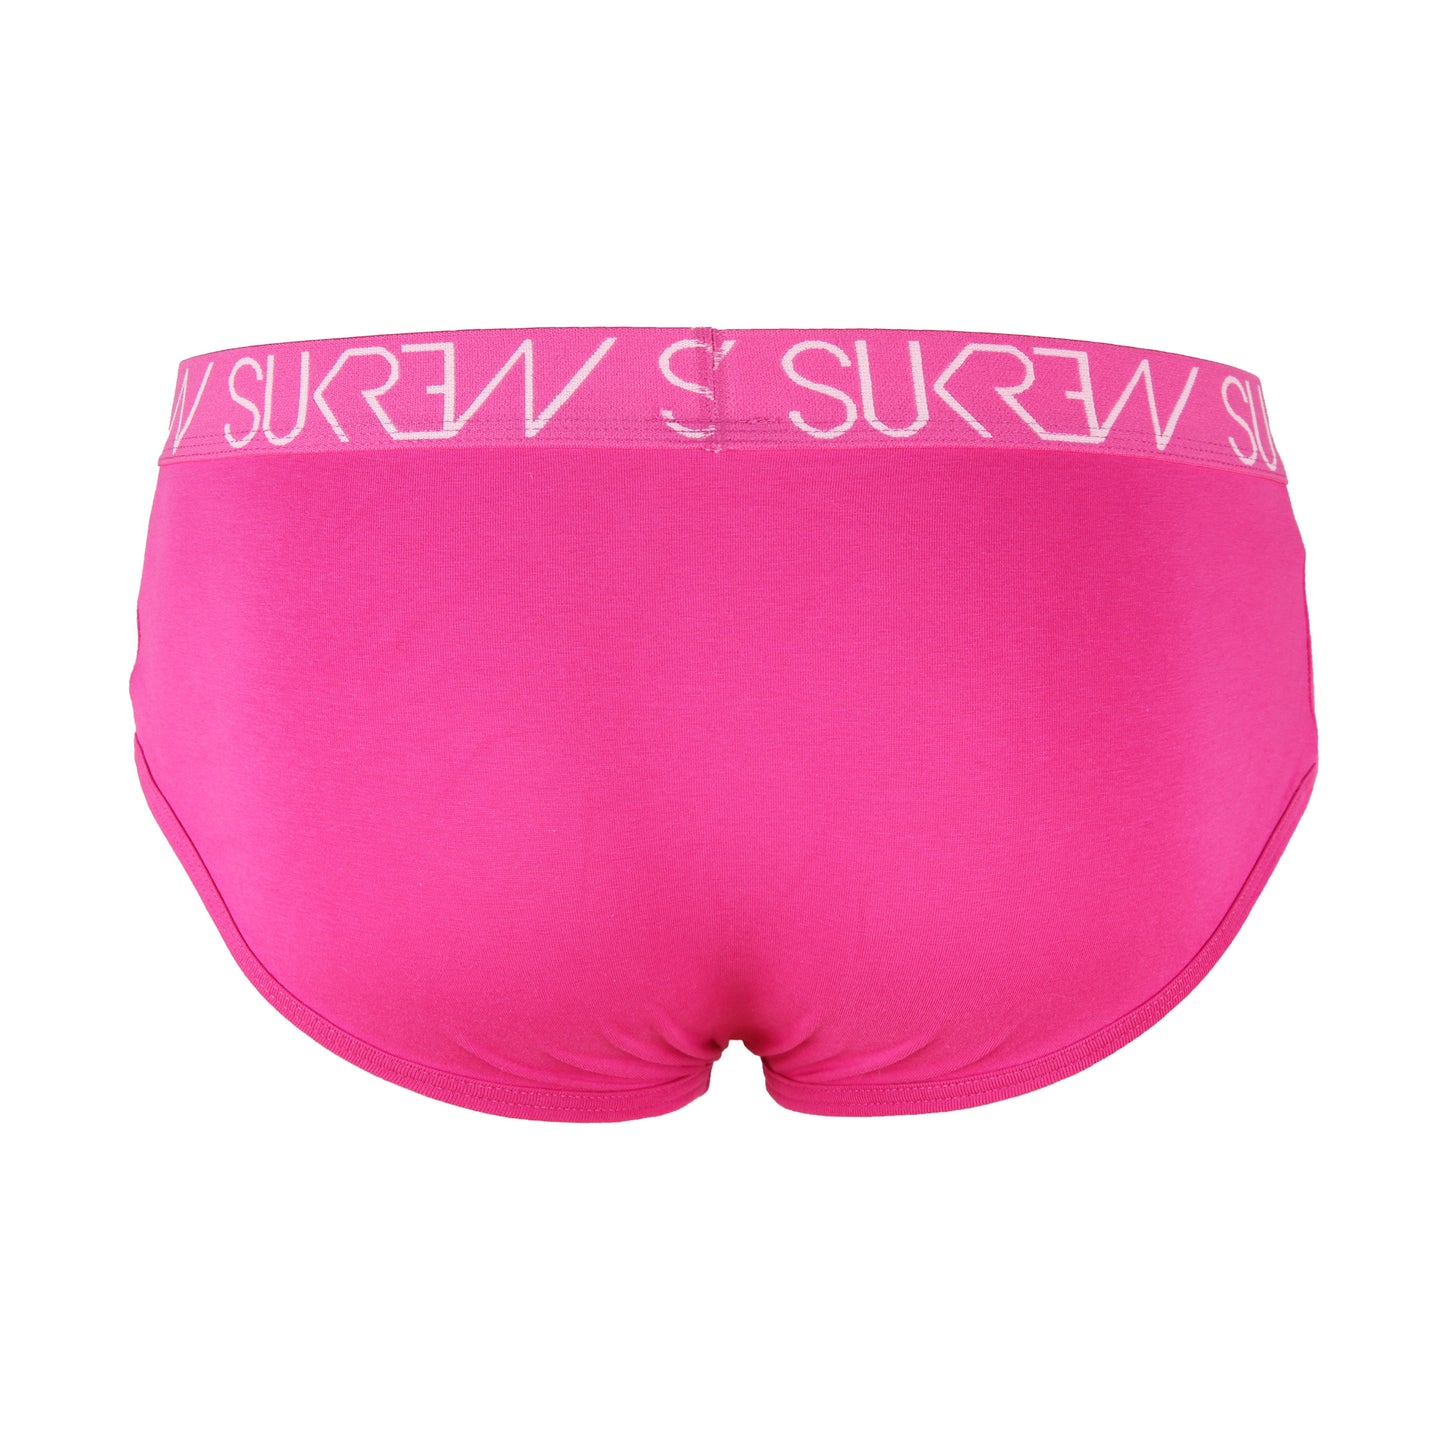 Sukrew - Apex Brief - Tropical Pink - Large